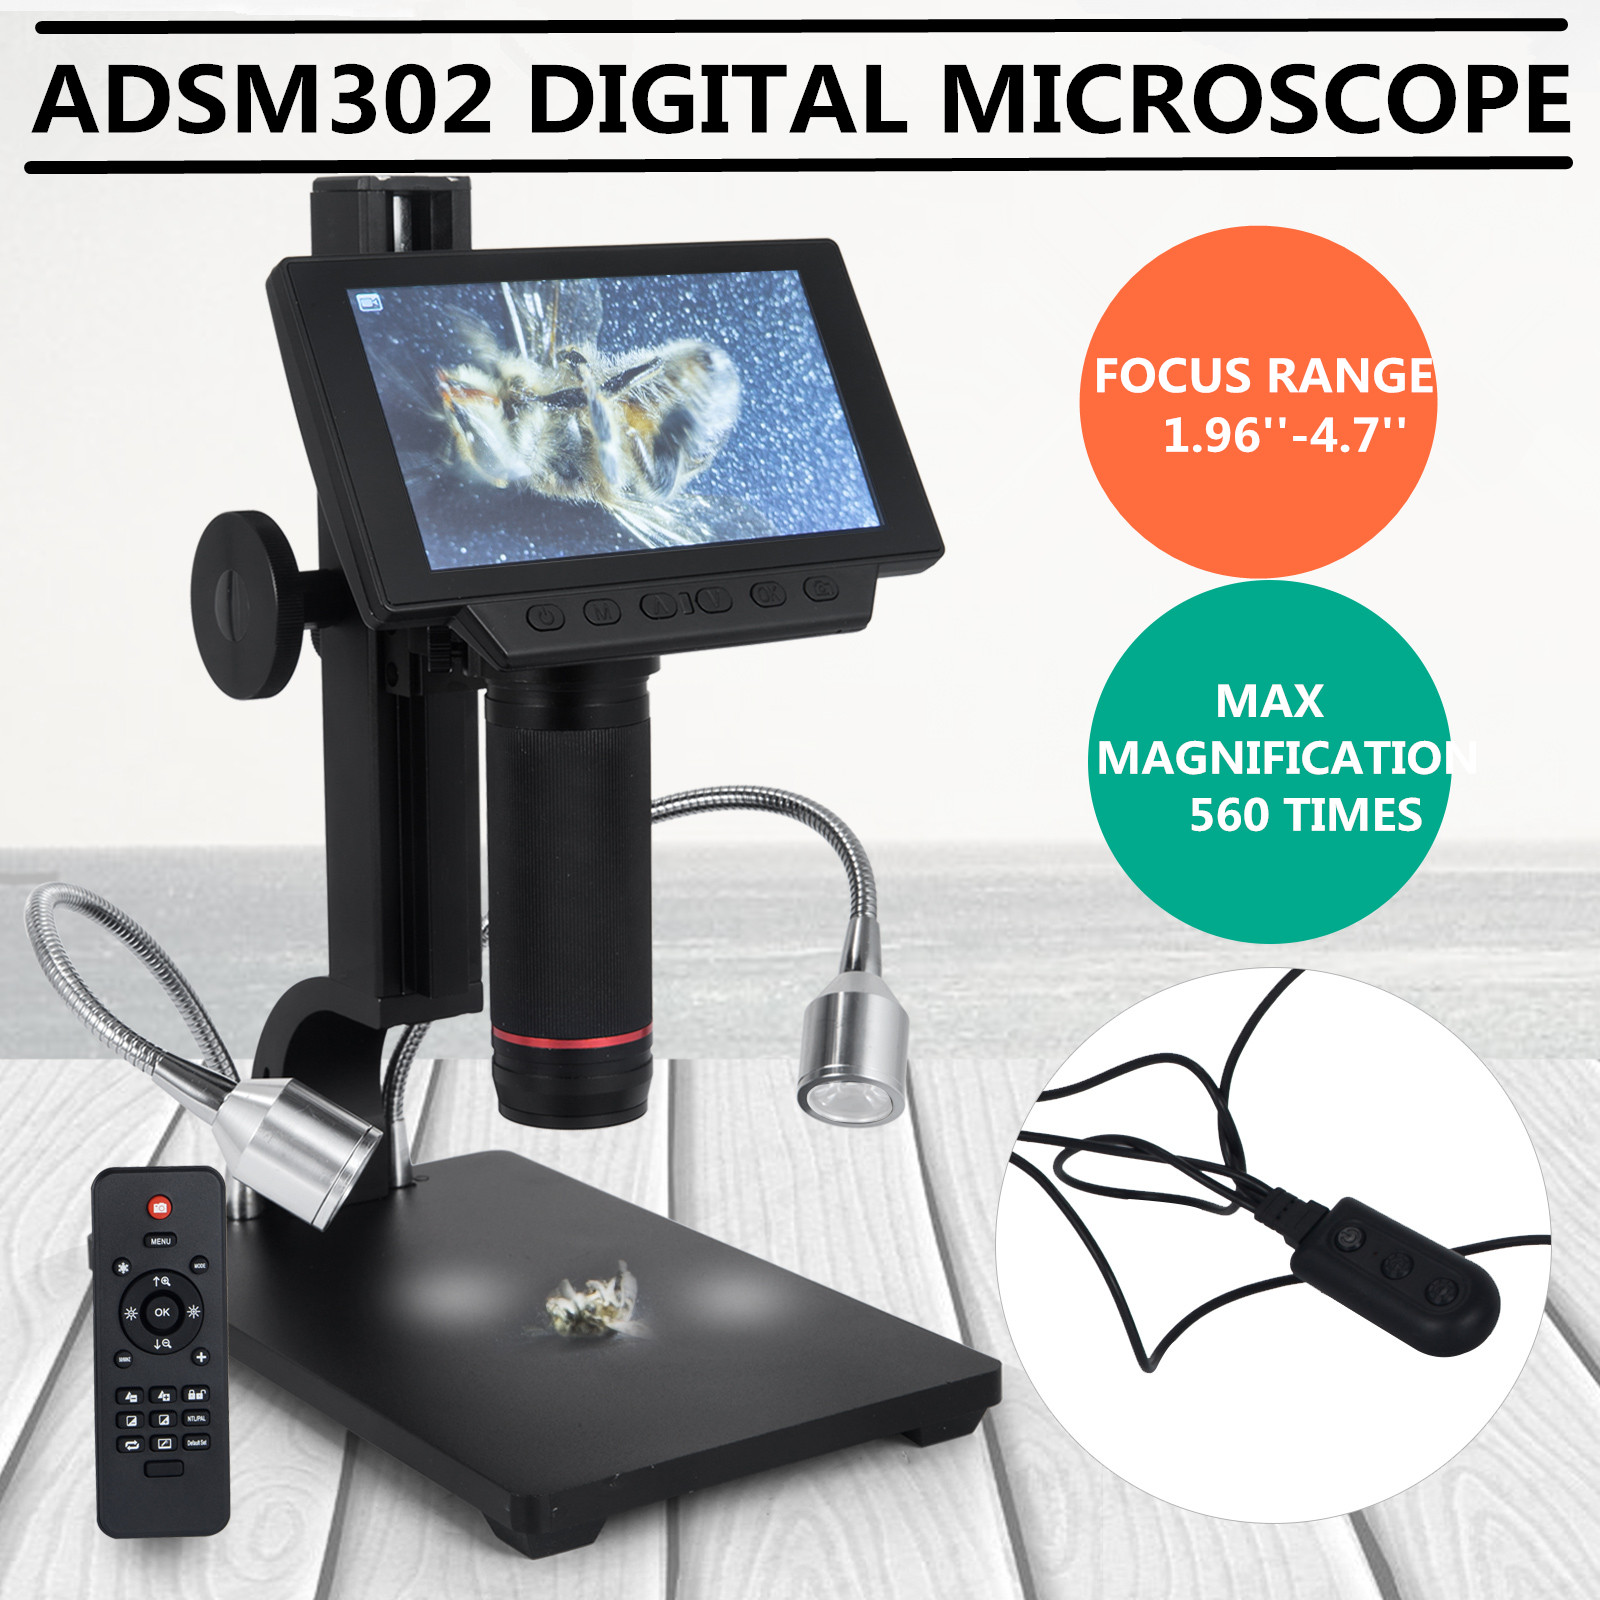 andonstar microscope software